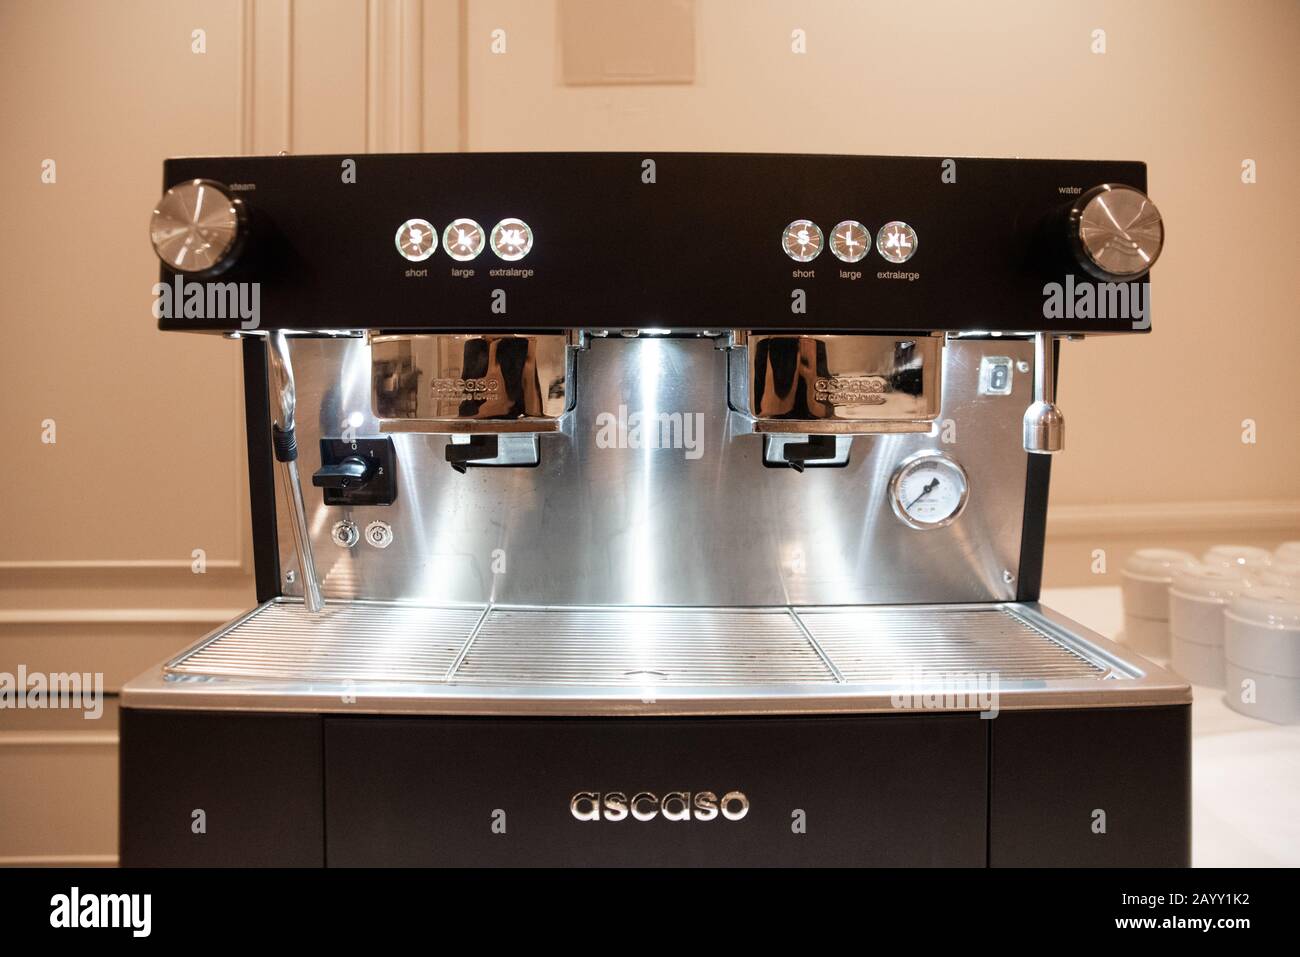 Valencia, Spanien - 13. Februar 2020: Kaffeemaschine der Marke Ascaso  Stockfotografie - Alamy